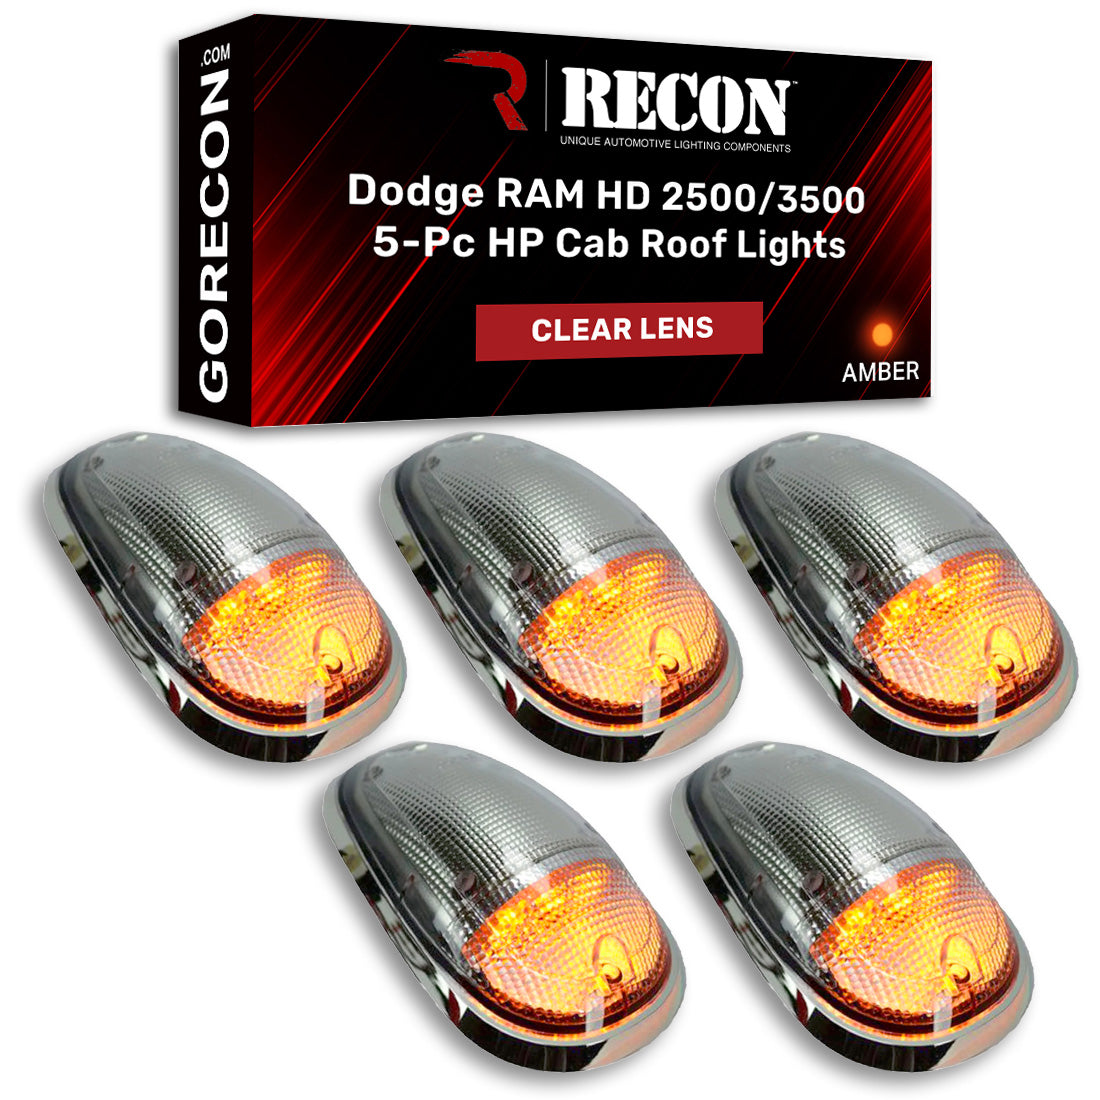 Dodge RAM Heavy-Duty 2500/3500 03-18 5 Piece Cab Roof Lights Set